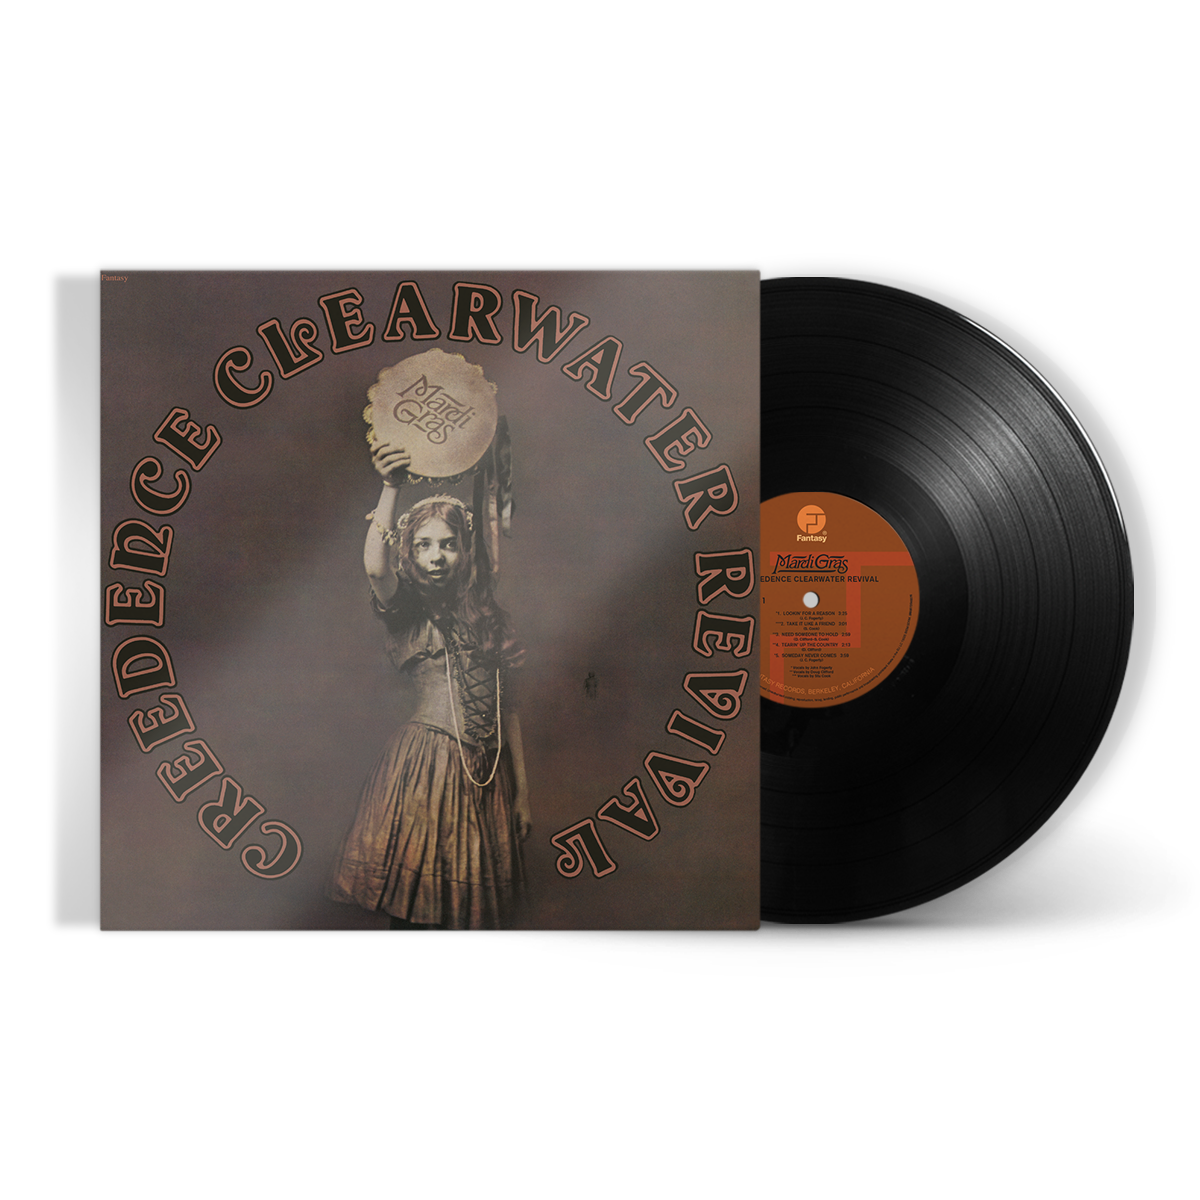 Creedence Clearwater Revival - Mardi Gras: Half Speed Master Vinyl LP